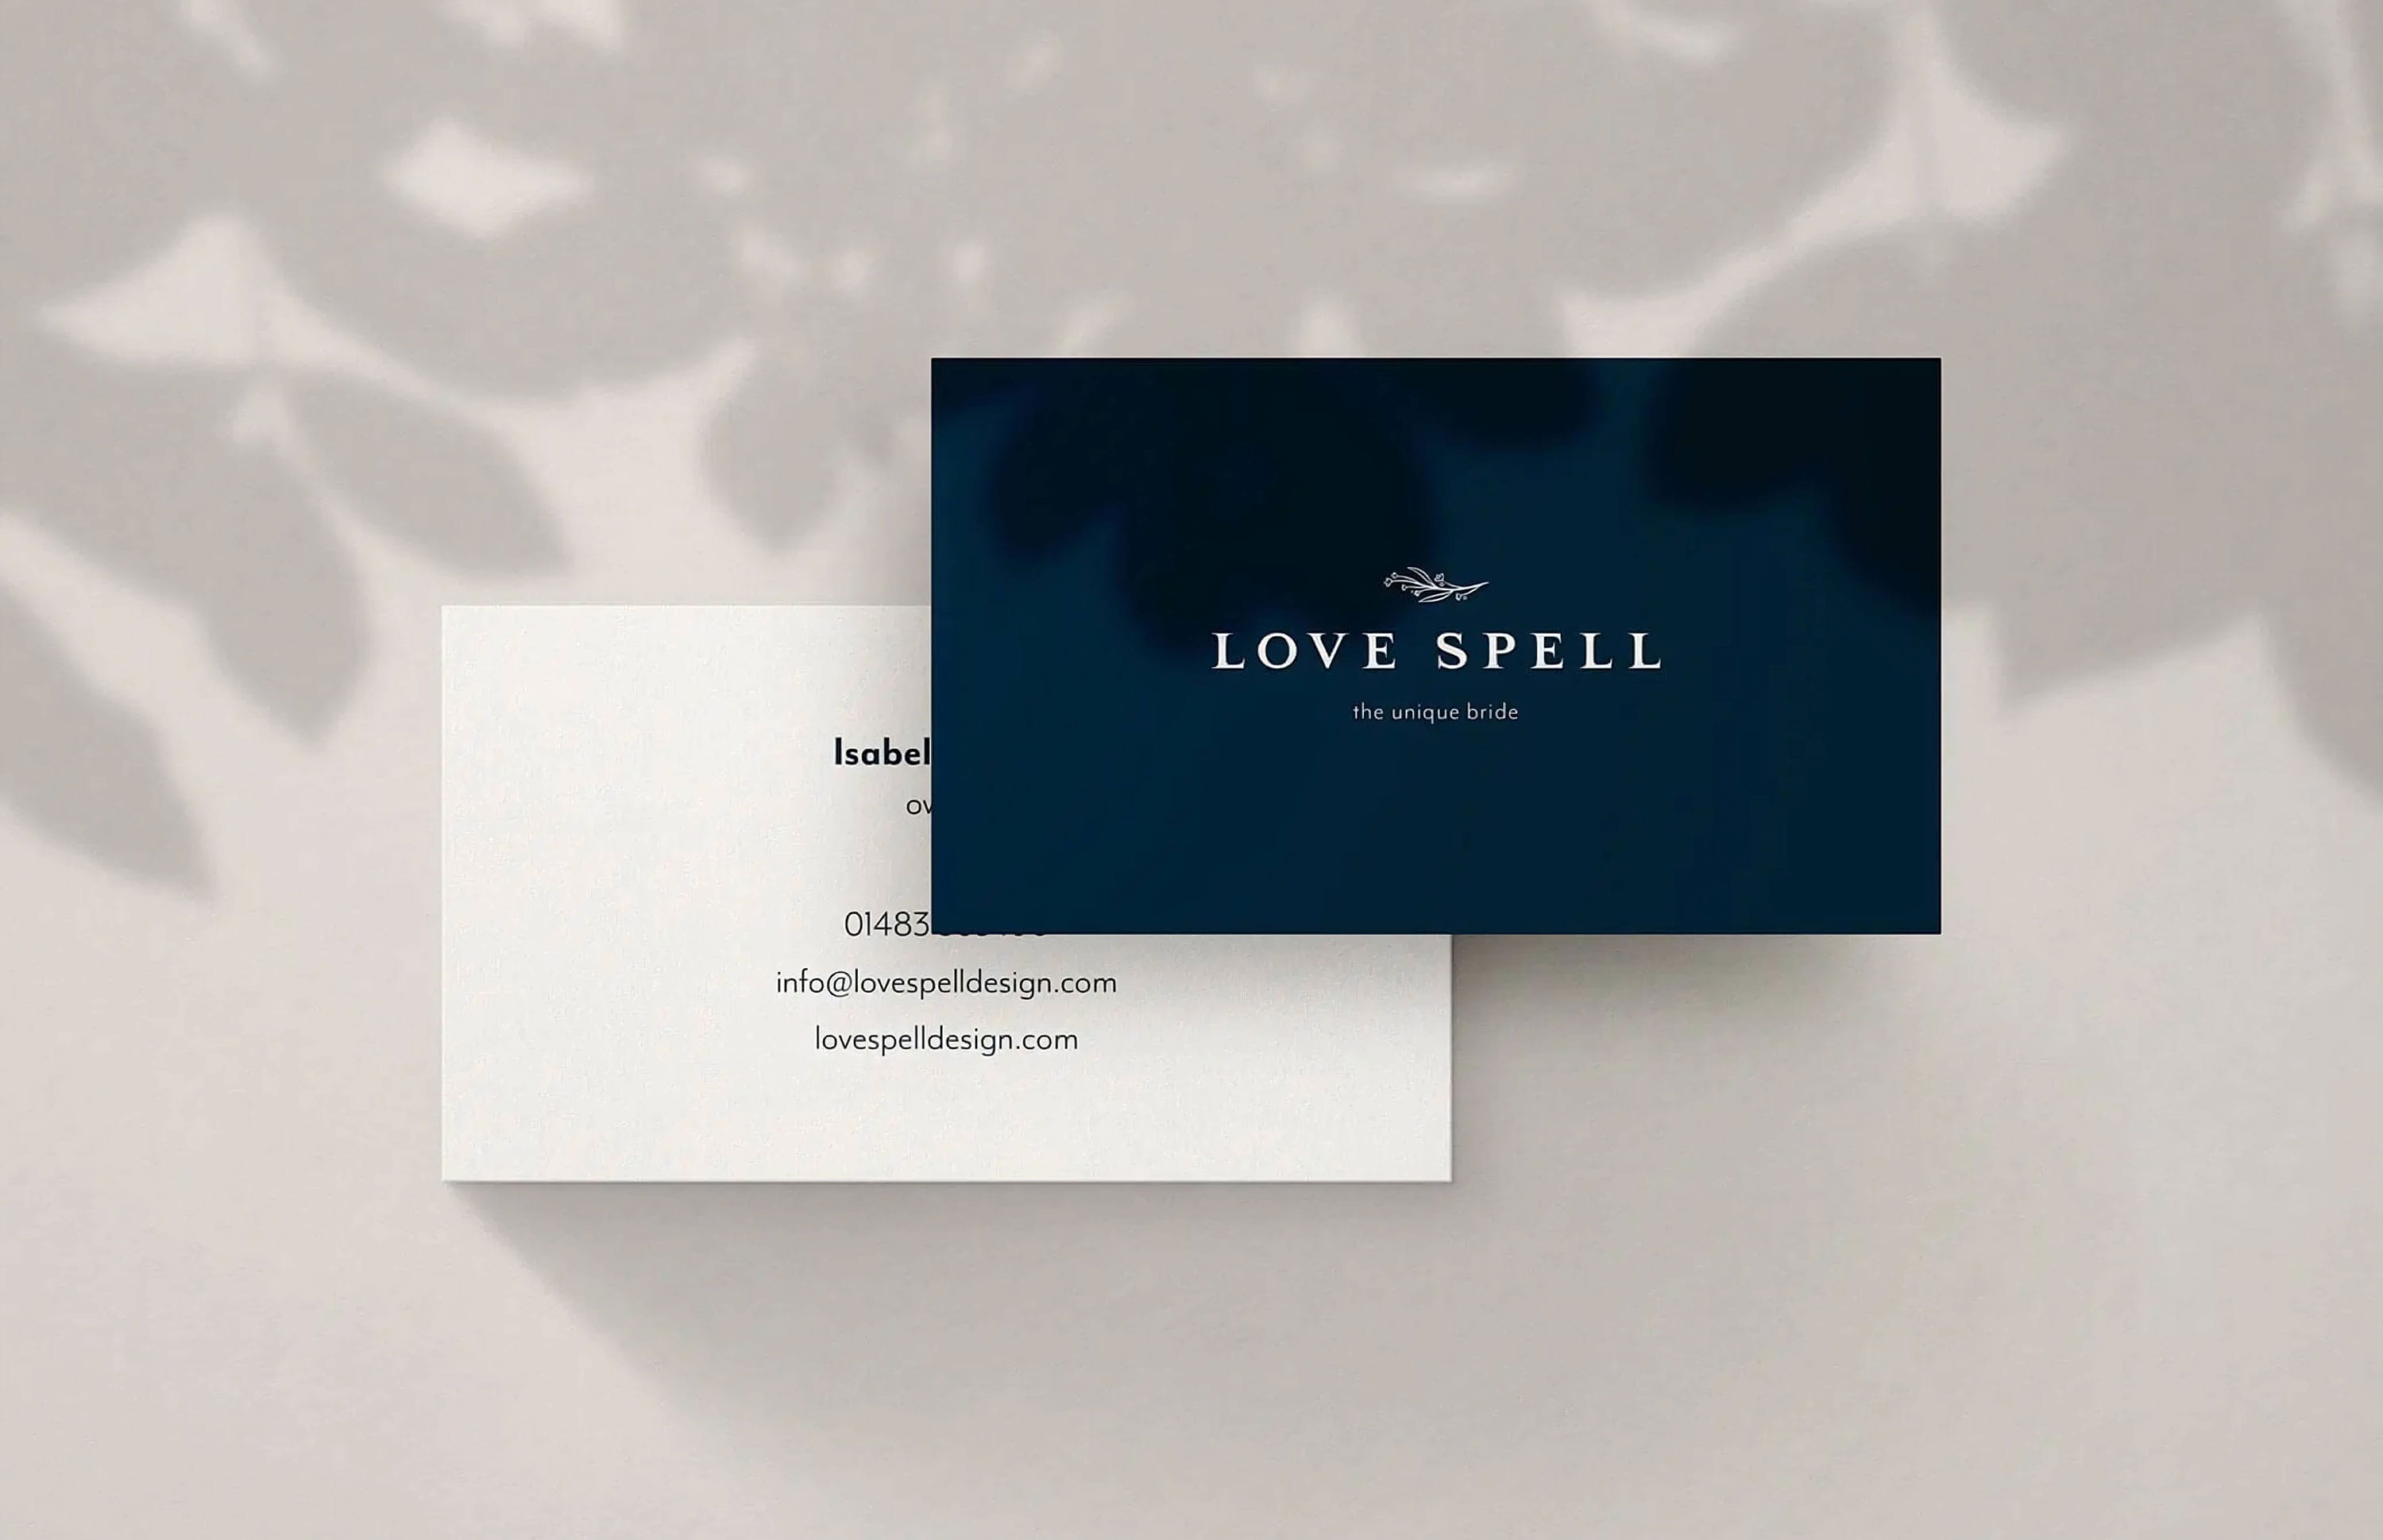 Love spell ecommerce dazze studio branding business cards | dazze studio